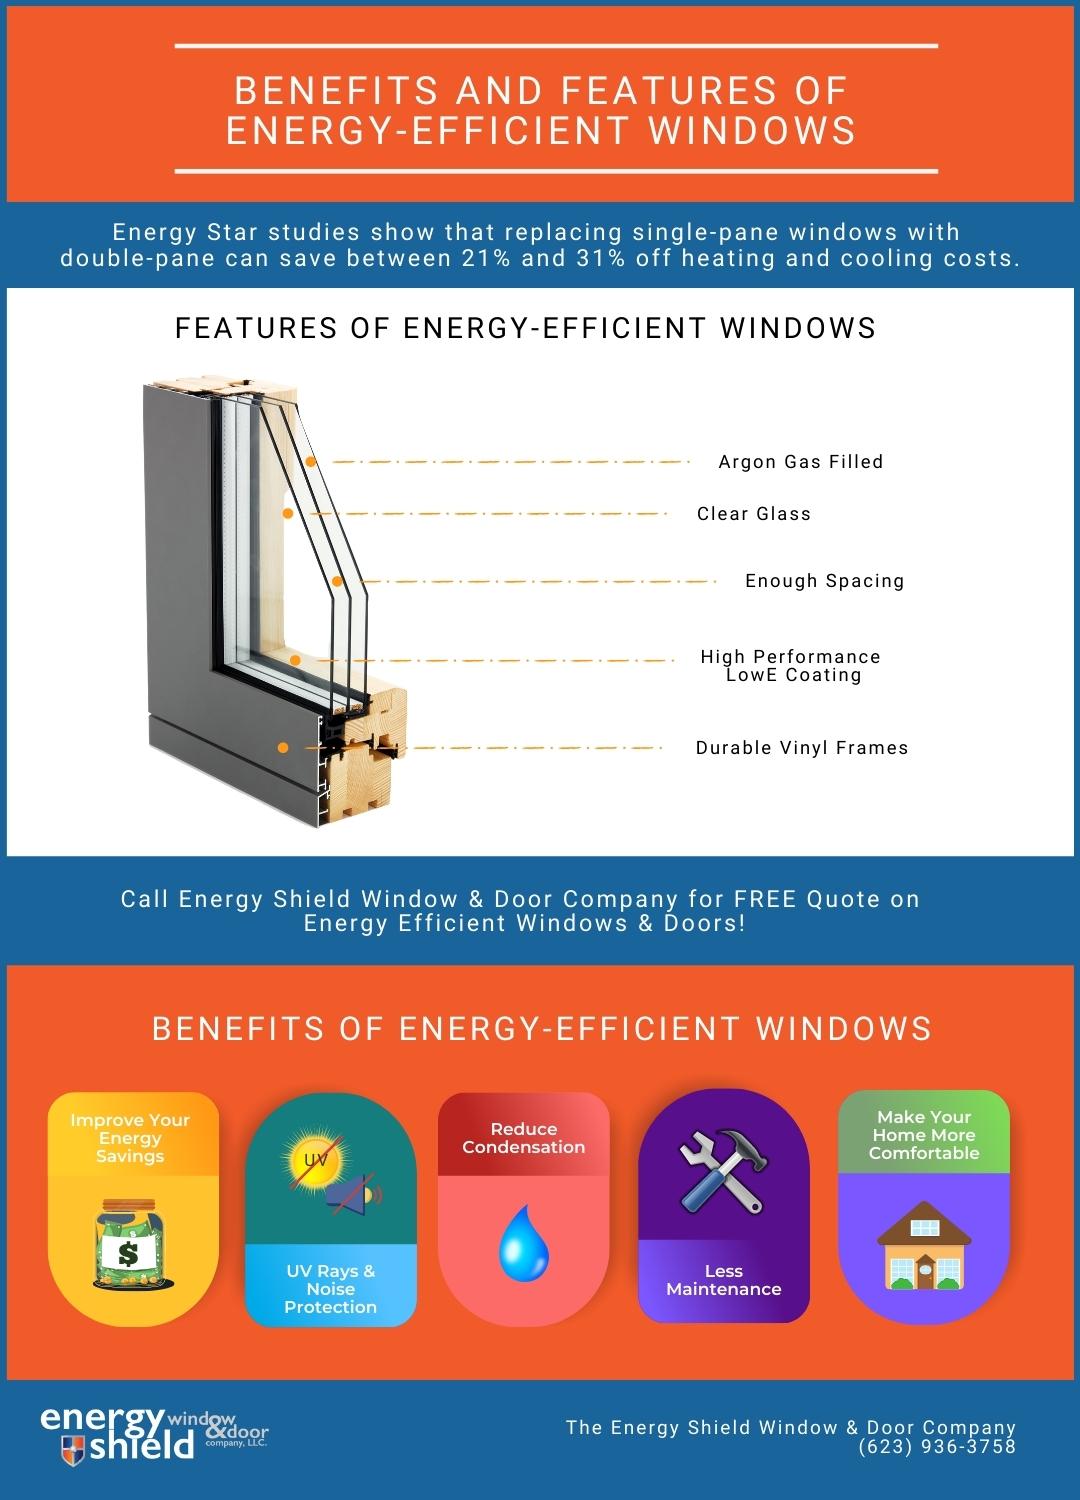 Energy Efficient Windows - Energy Shield Window & Door Company